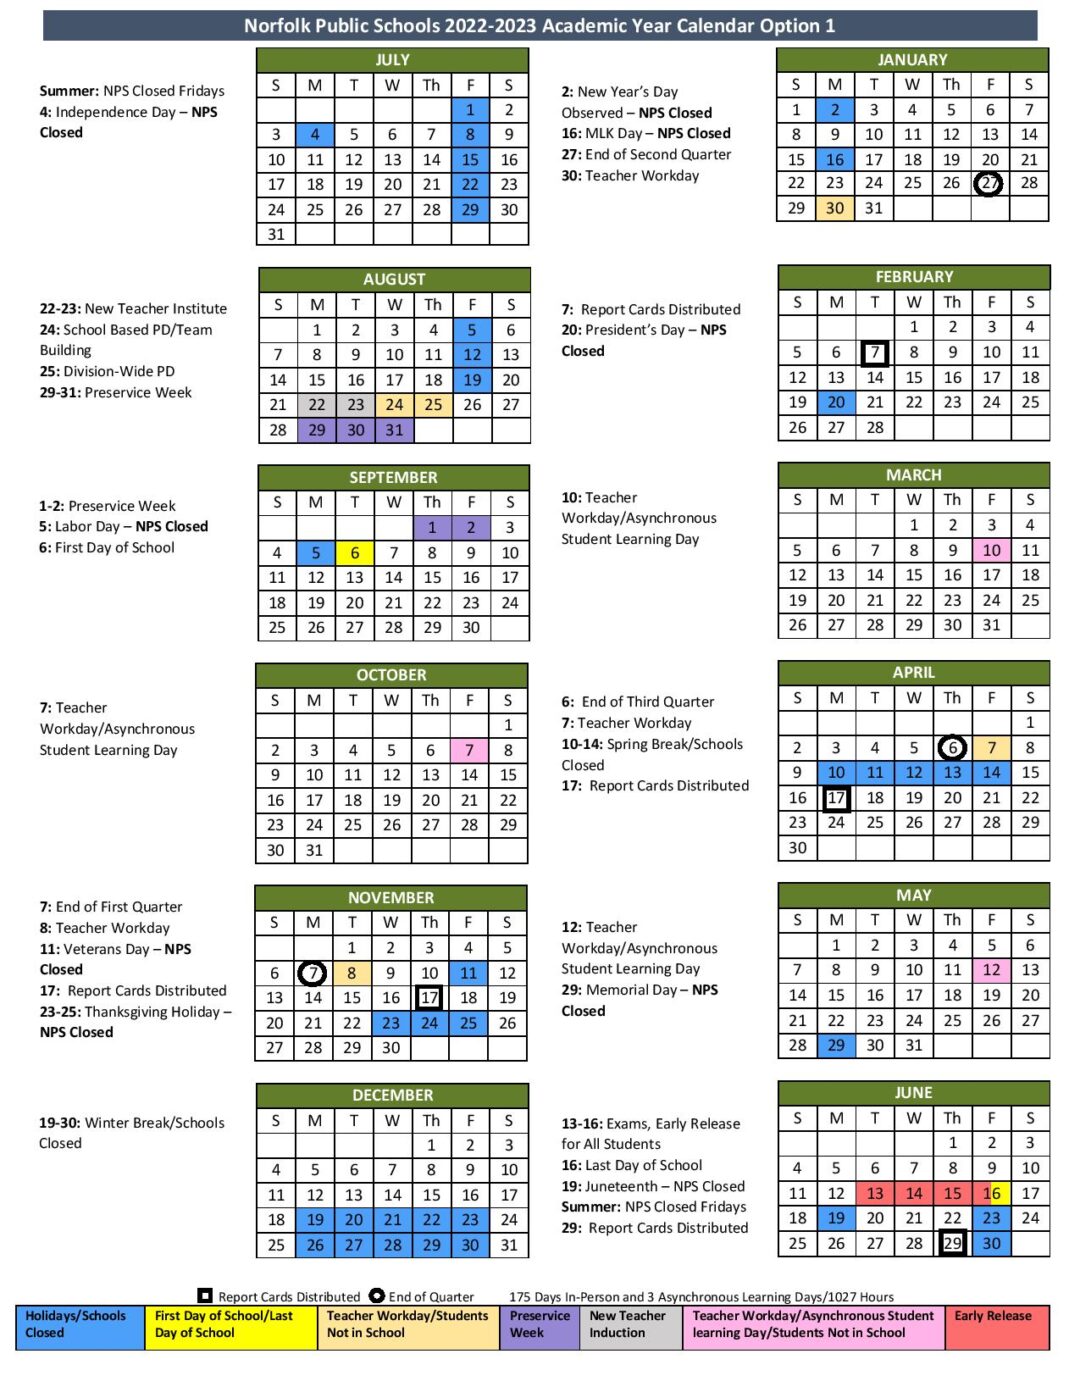 Norfolk Public Schools Calendar 20222023 in PDF